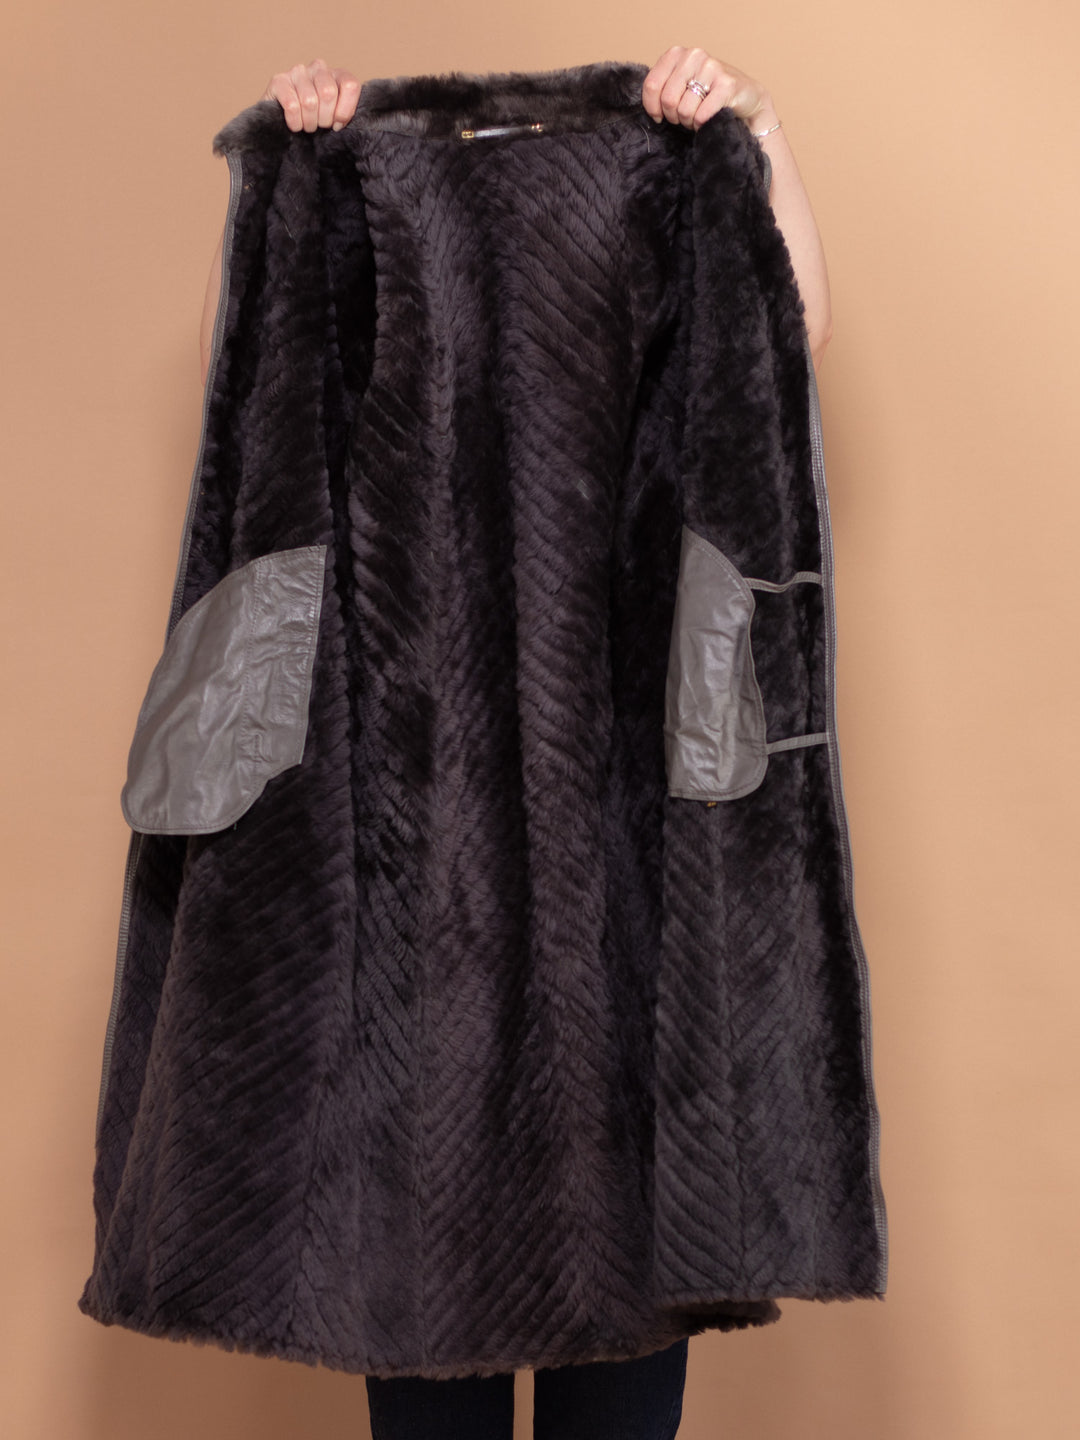 Sheepskin Coat 80's, Size Medium M Warm Shearling Fur Coat, Gray Sheepskin Overcoat, Elegant Sheepskin Coat, Penny Lane, Winter Outerwear